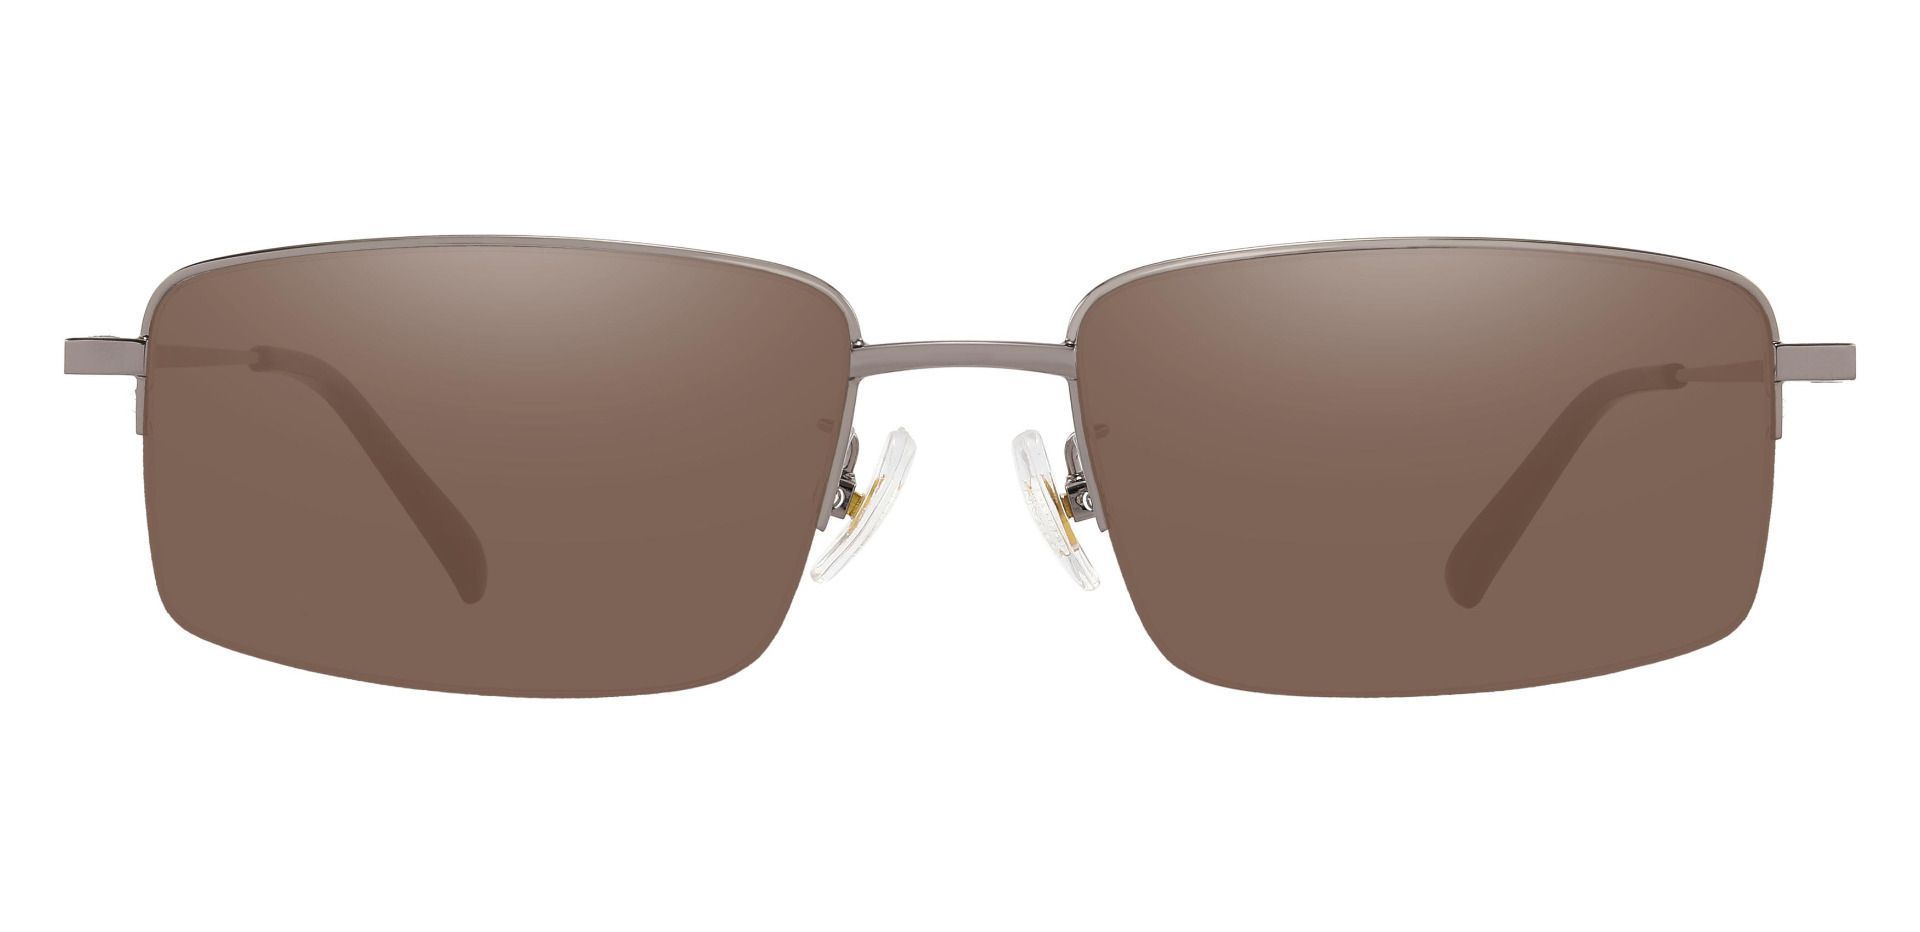 Wayne Rectangle Prescription Sunglasses - Gray Frame With Brown Lenses